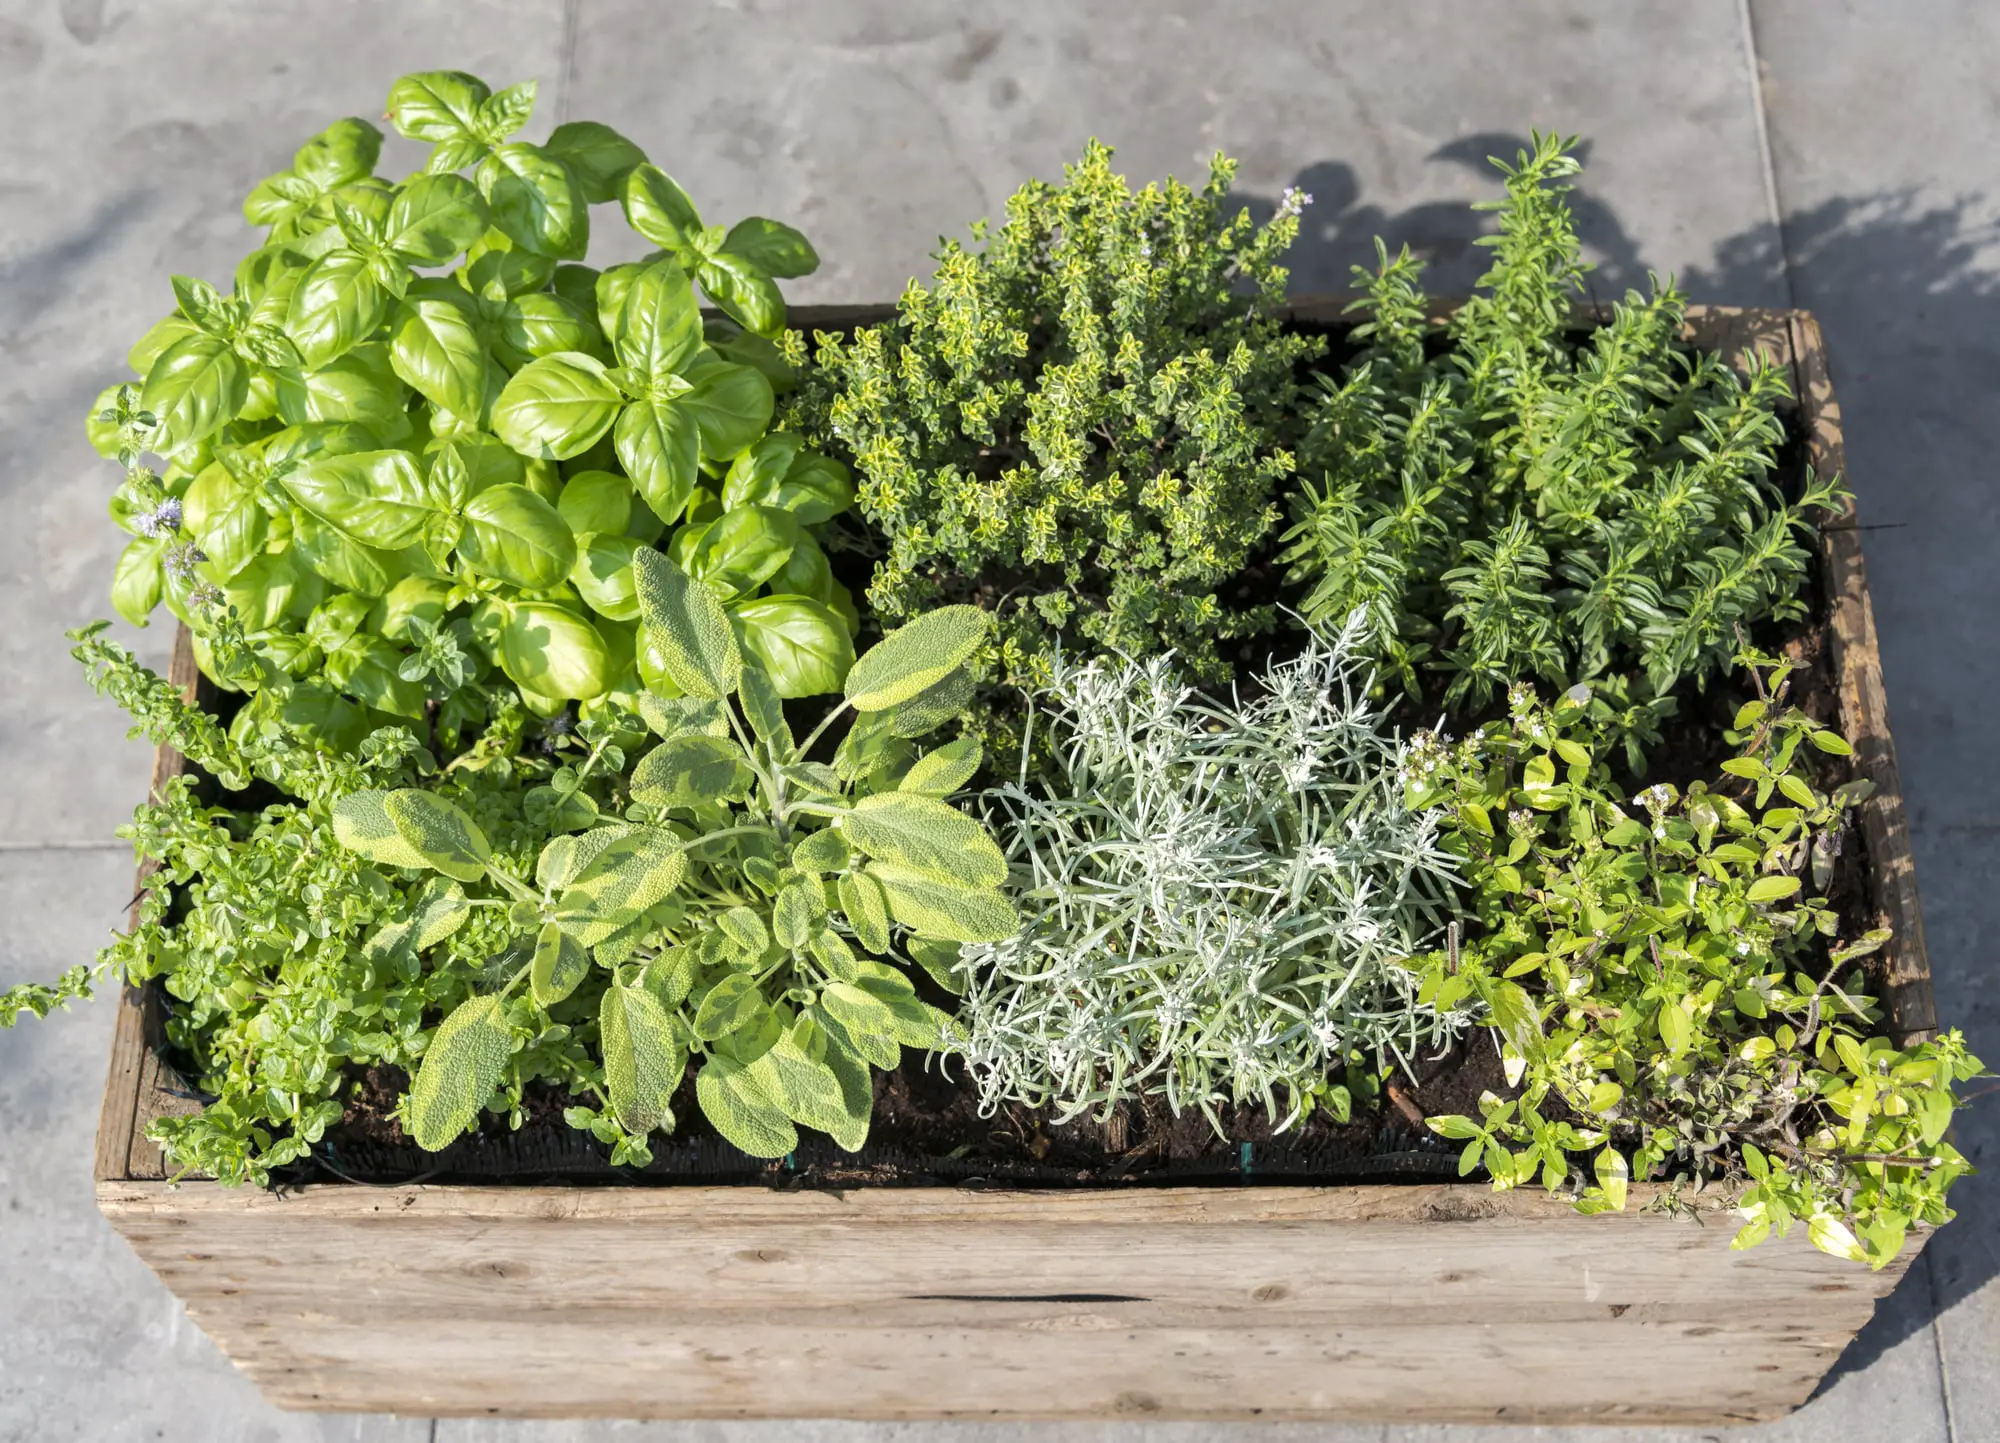 How to grow herbs organically